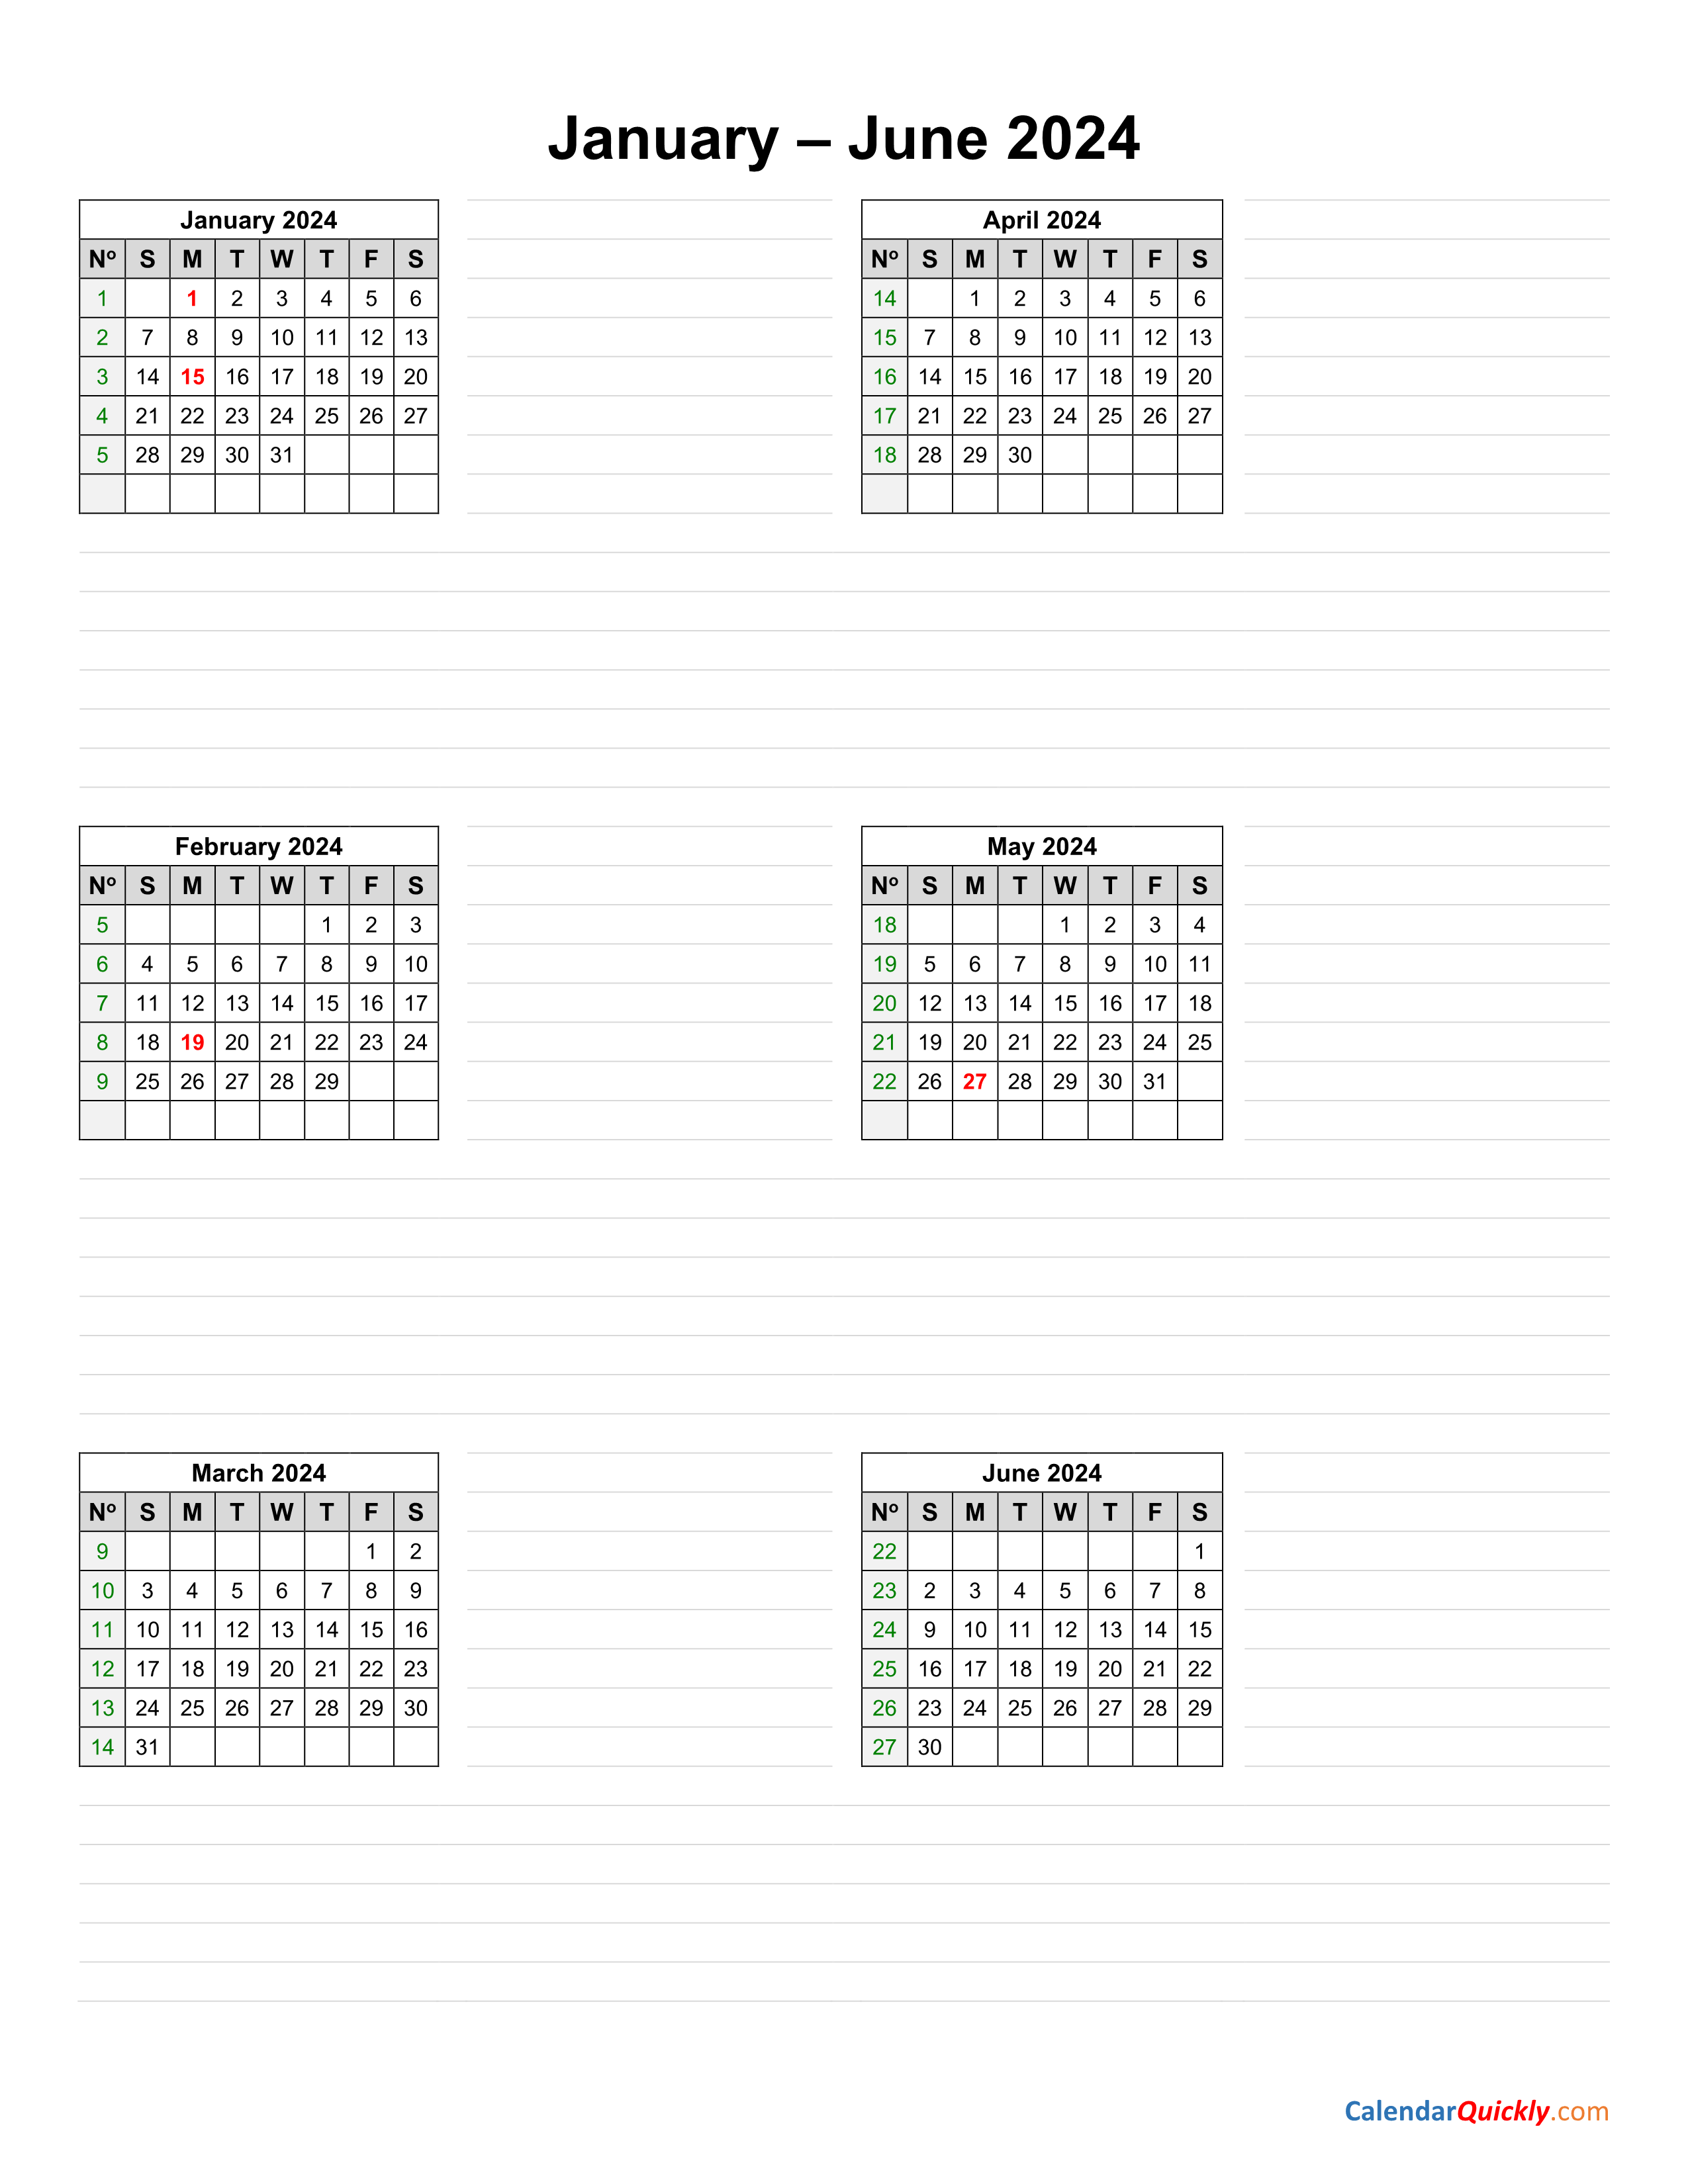 January To June 2024 Calendar Vertical | Calendar Quickly in 2024 Calendar January To June